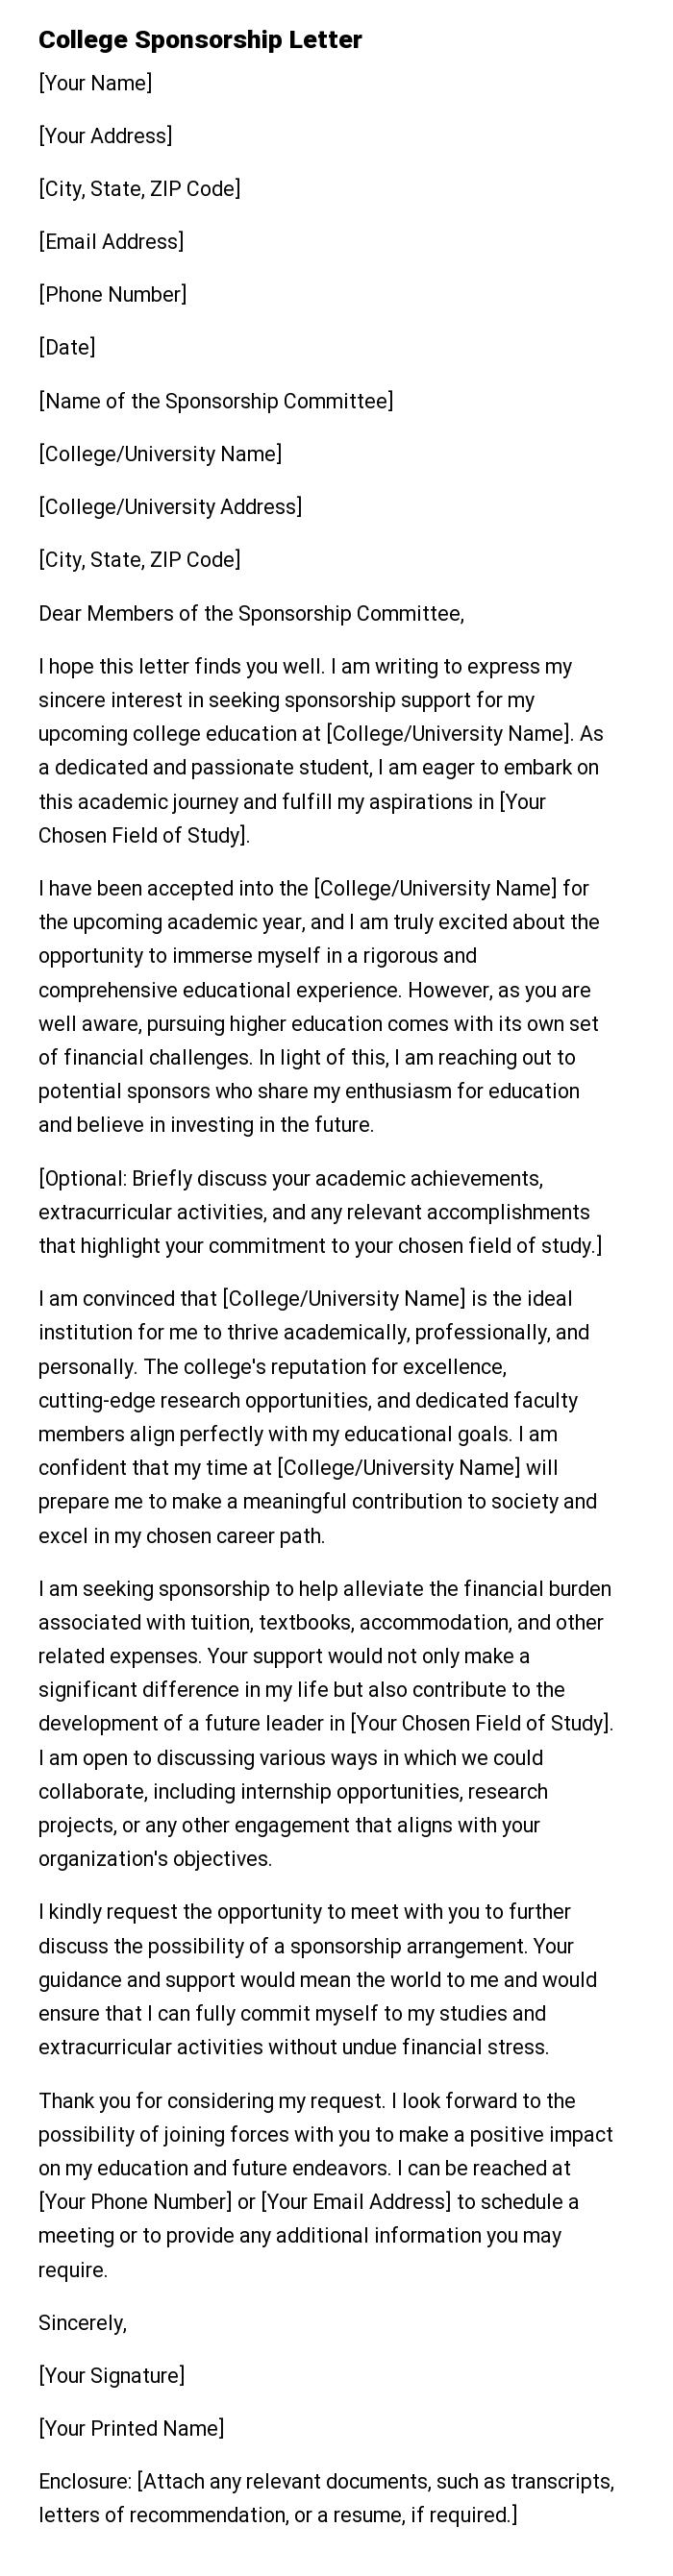 College Sponsorship Letter